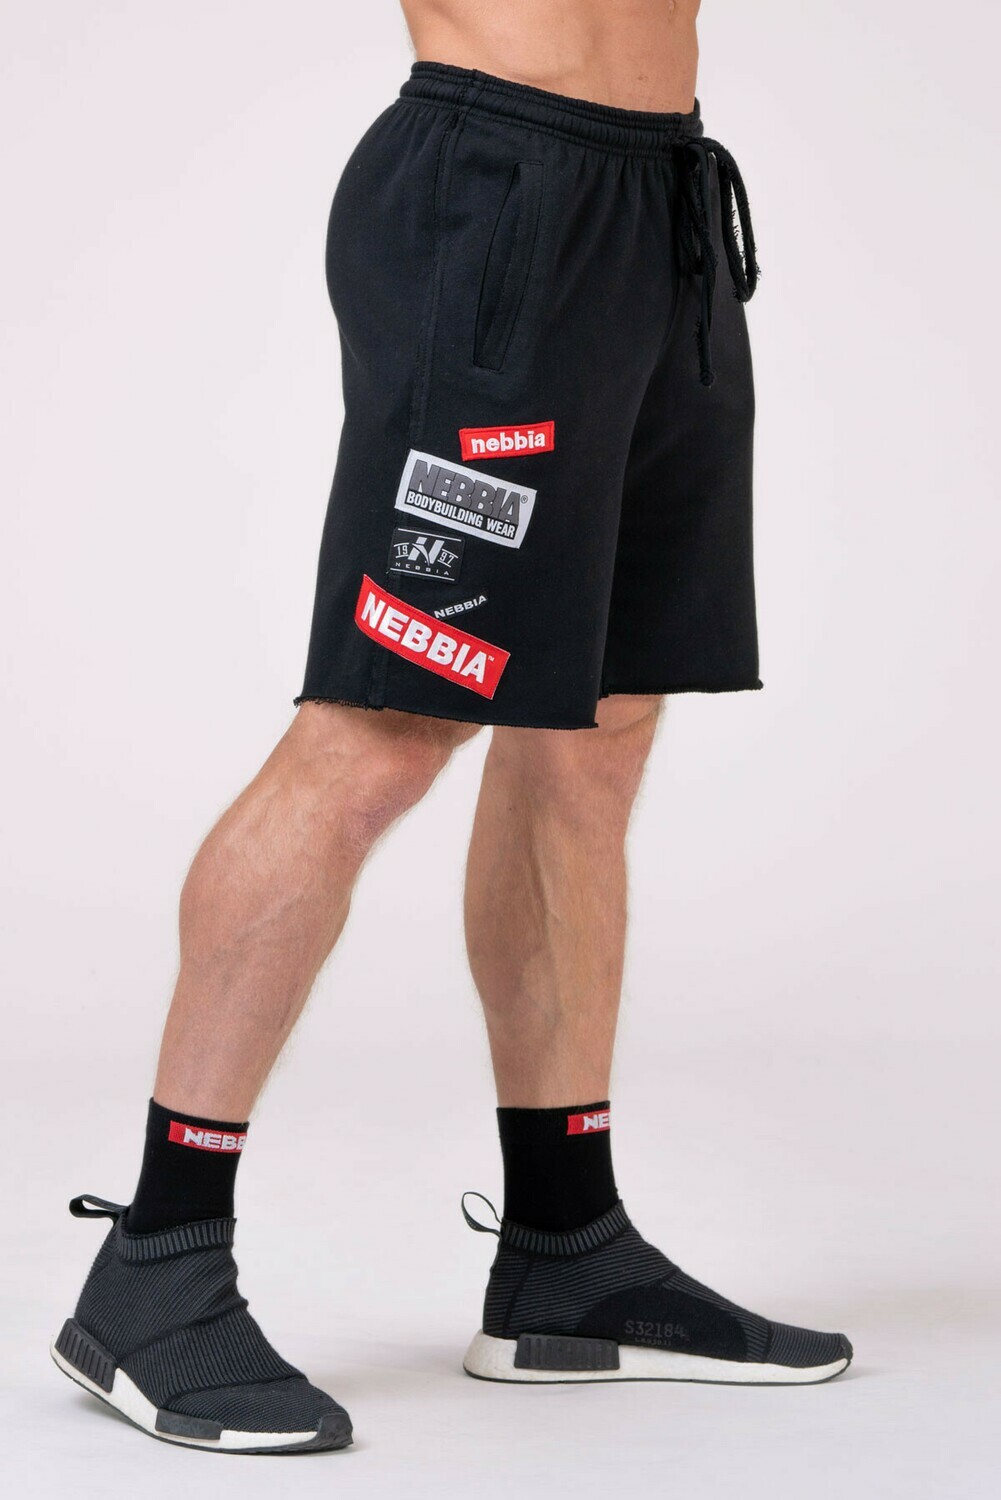 Шорты NEBBIA Labels Shorts 178 Черные